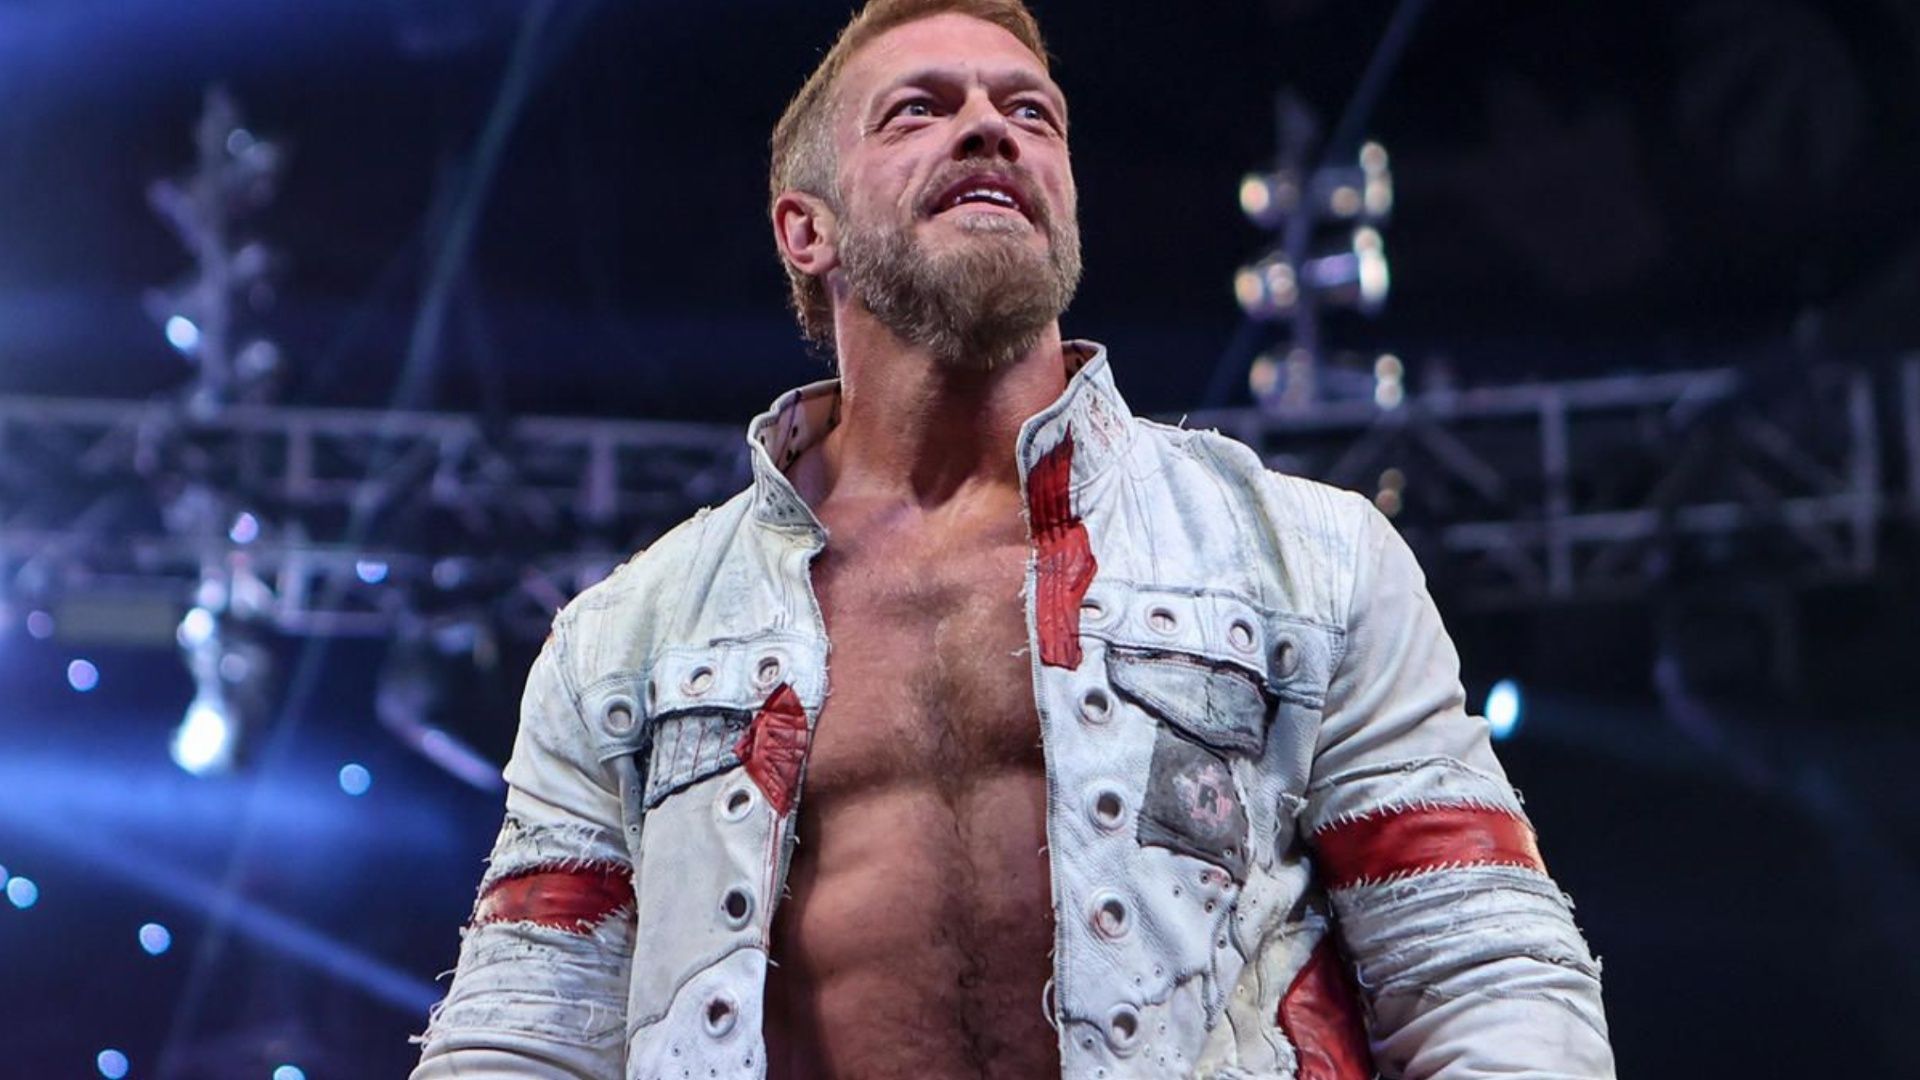 Edge will wrestle on SmackDown next week.